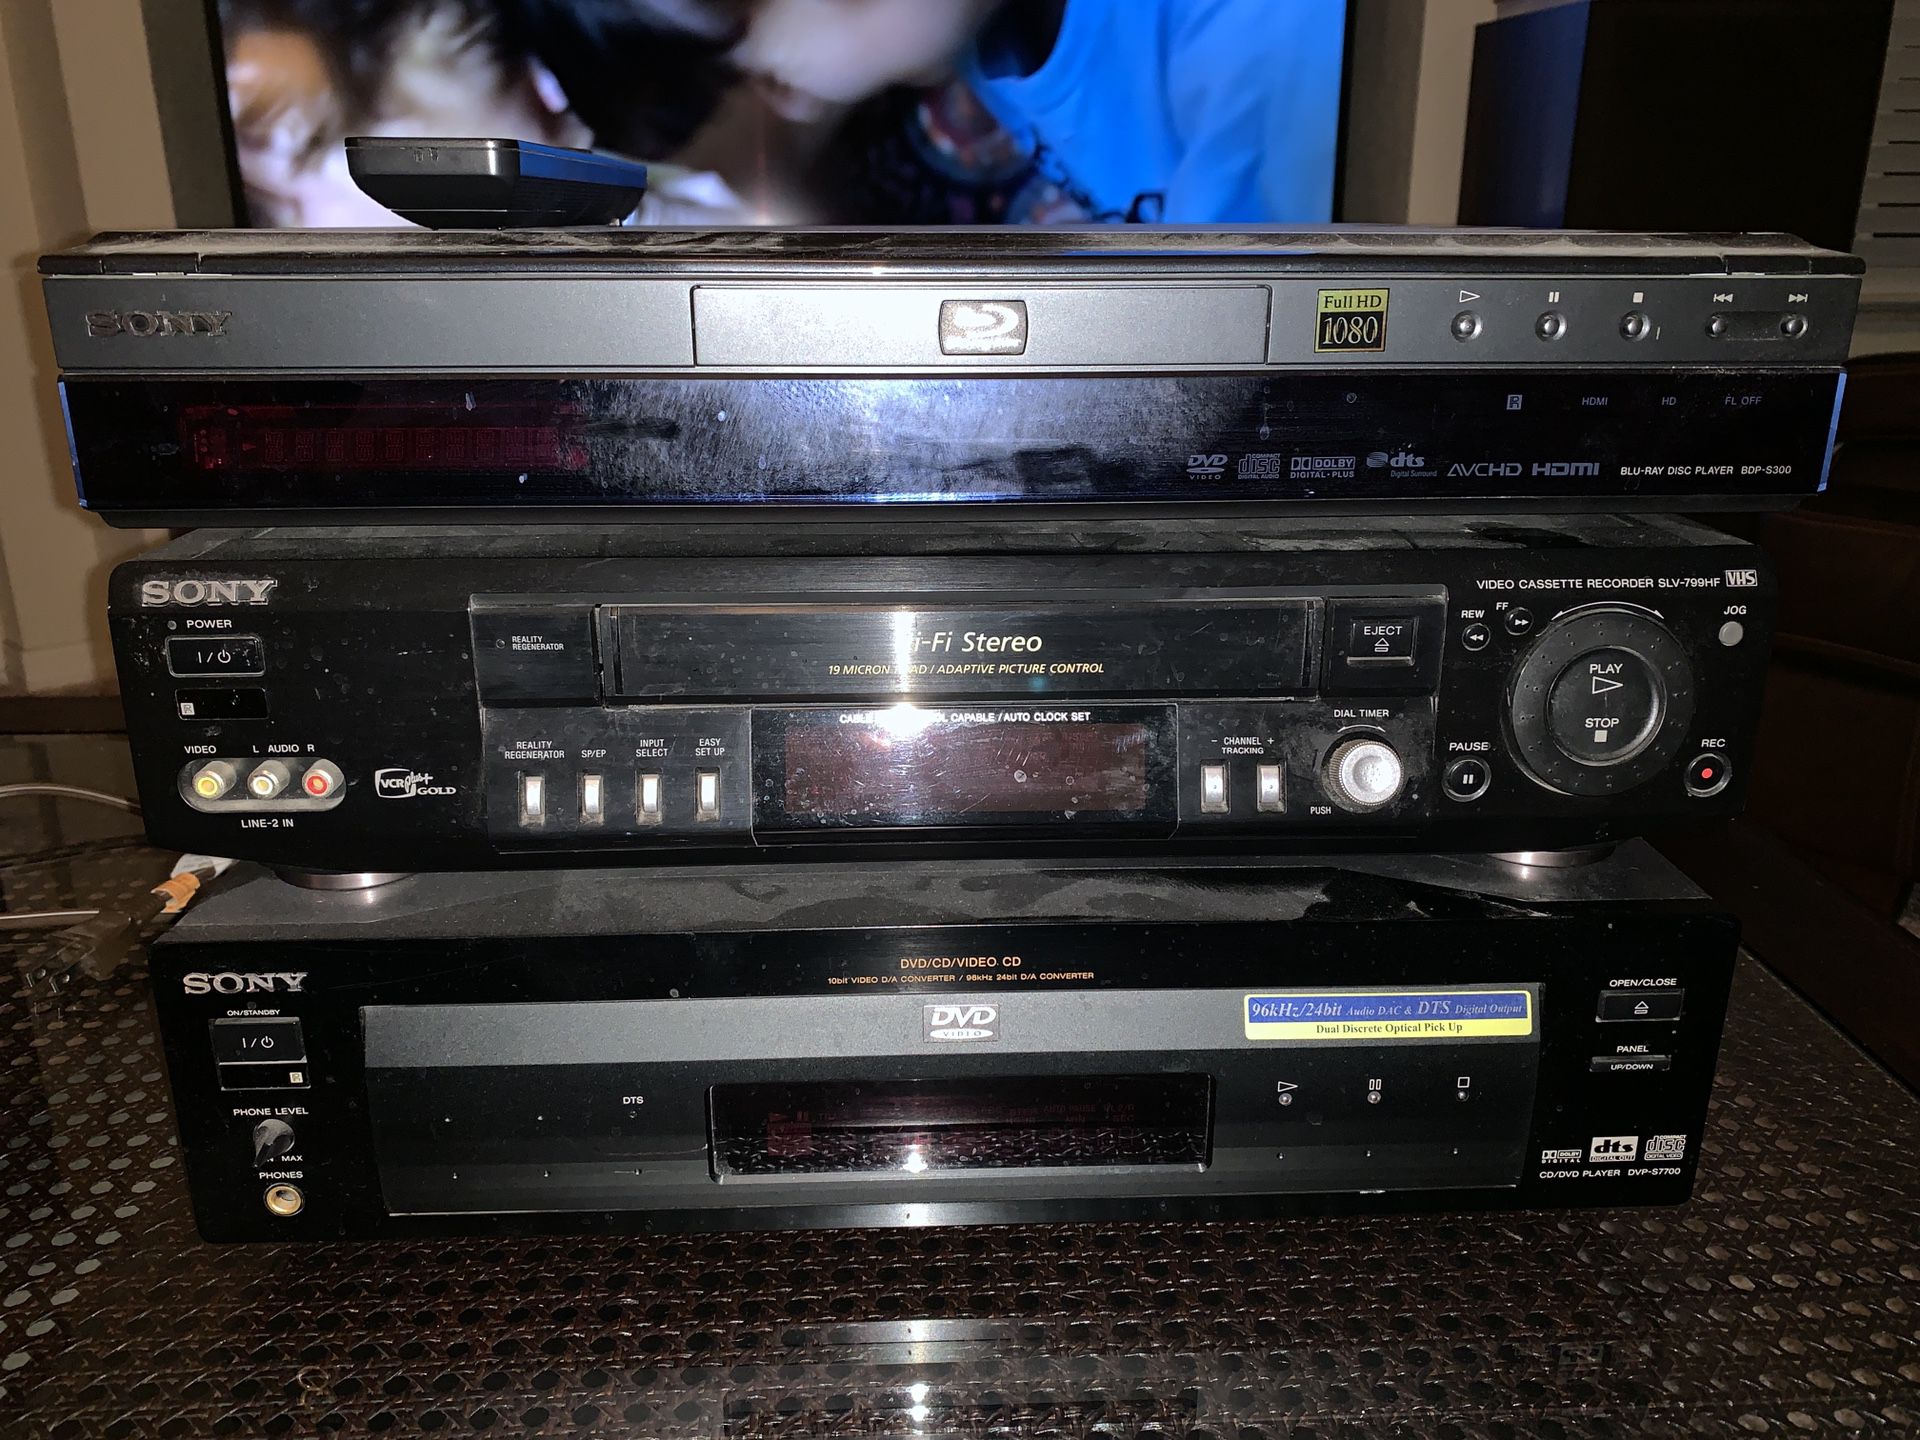 2 SONY DVD PLAYERS (1 BLU-RAY) & 1 SONY VHS MACHINE